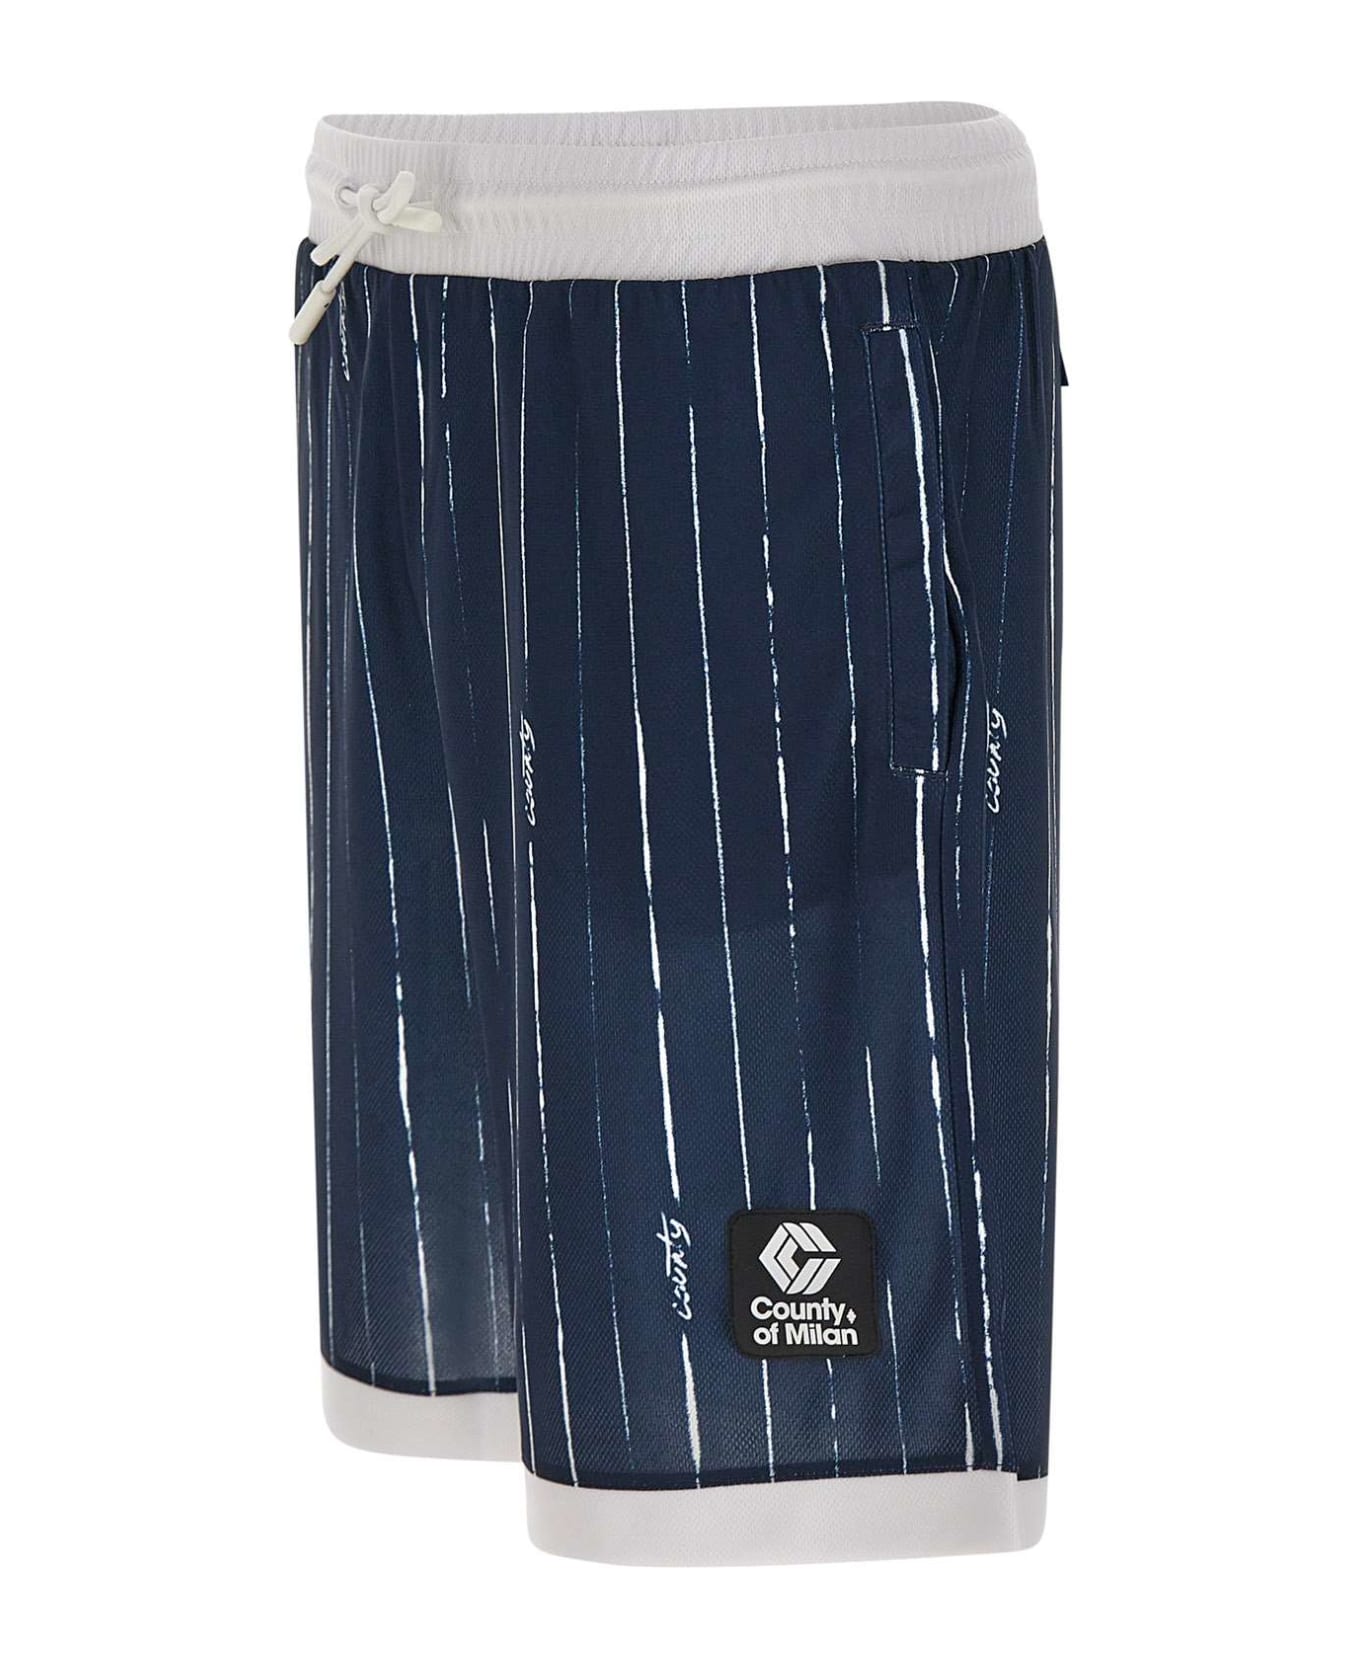 Marcelo Burlon 'county Pinstripes' Shorts - BLUE